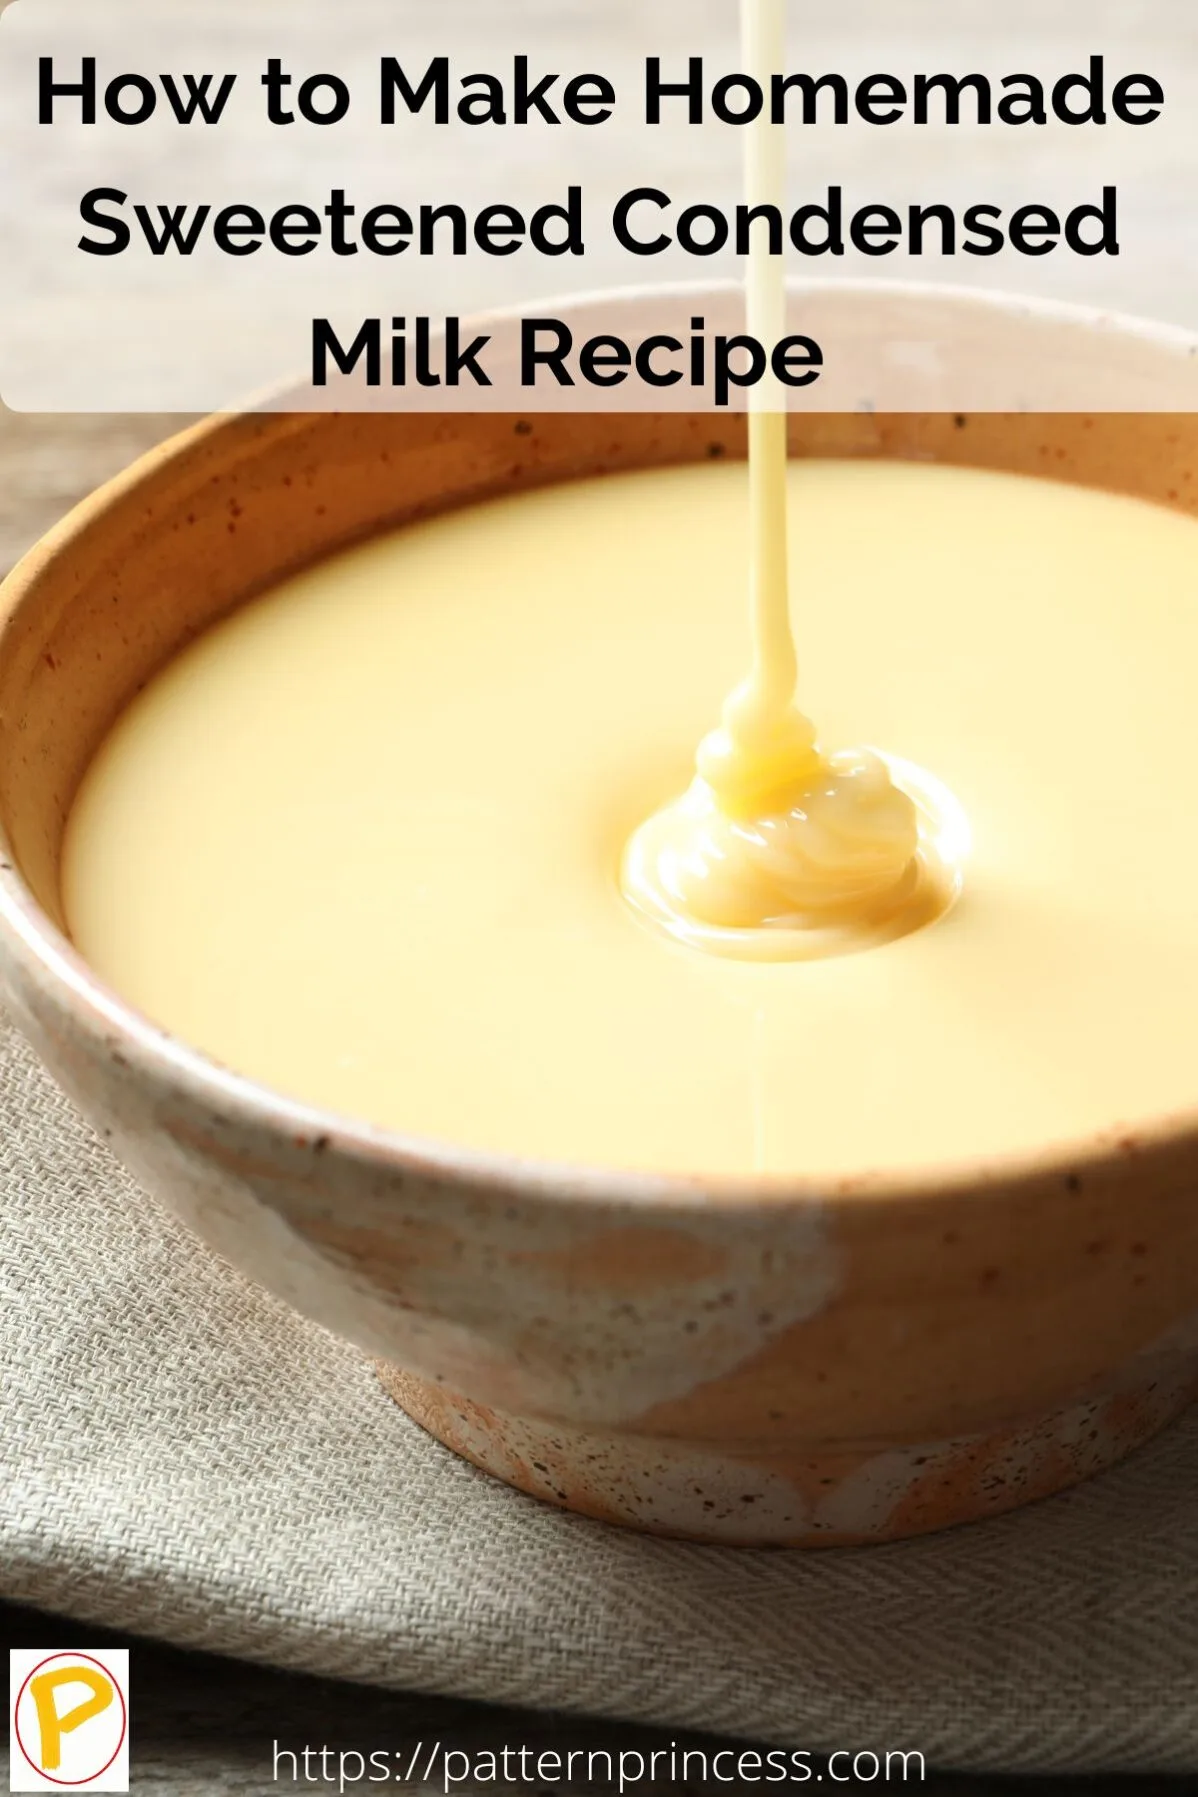 How to Make Homemade Sweetened Condensed Milk Recipe